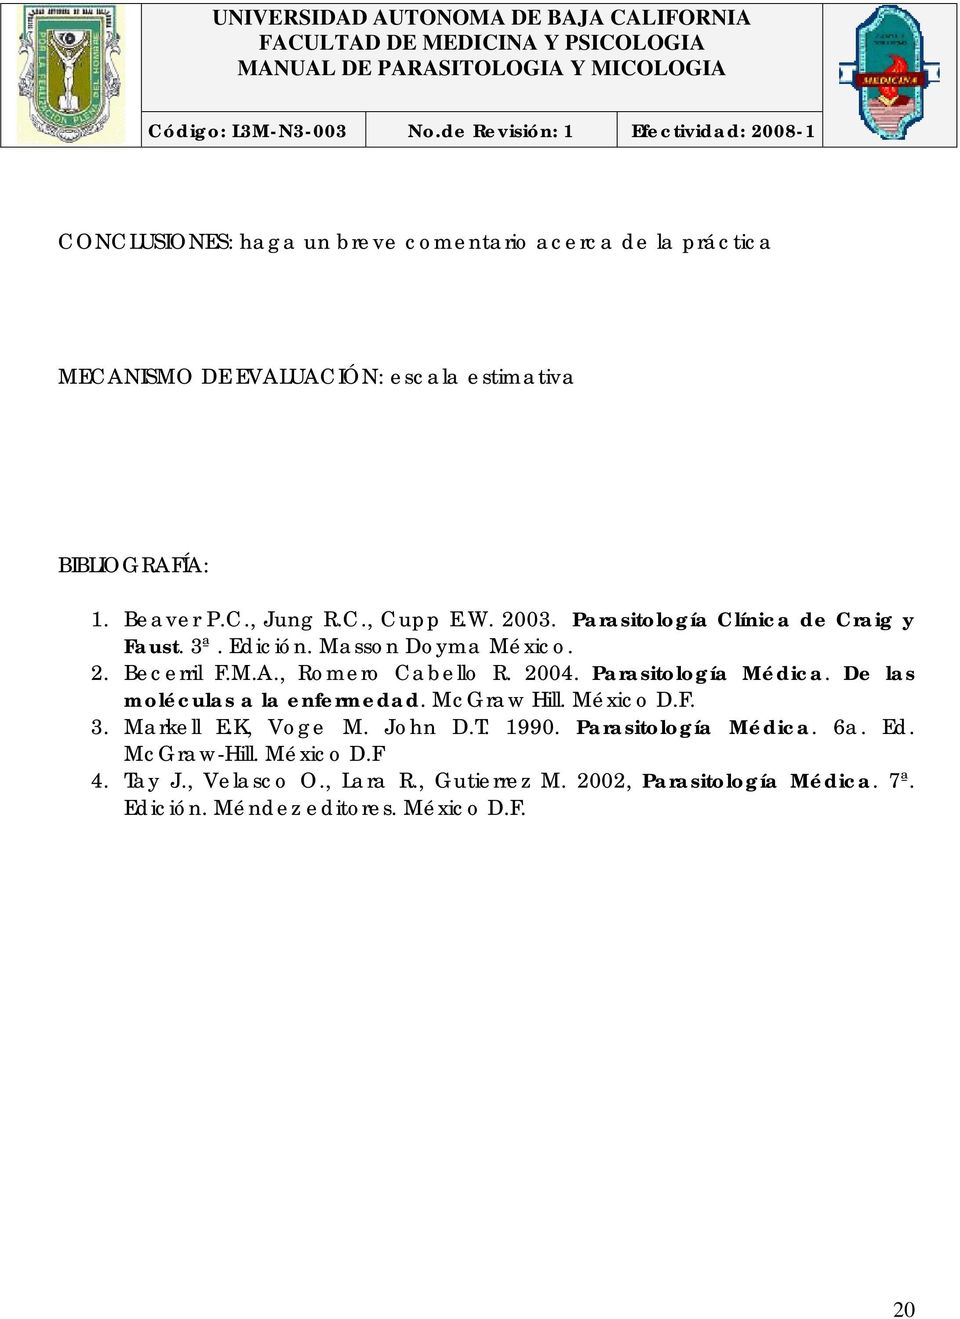 Parasitología Médica. De las moléculas a la enfermedad. McGraw Hill. México D.F. 3. Markell E.K, Voge M. John D.T. 1990. Parasitología Médica.